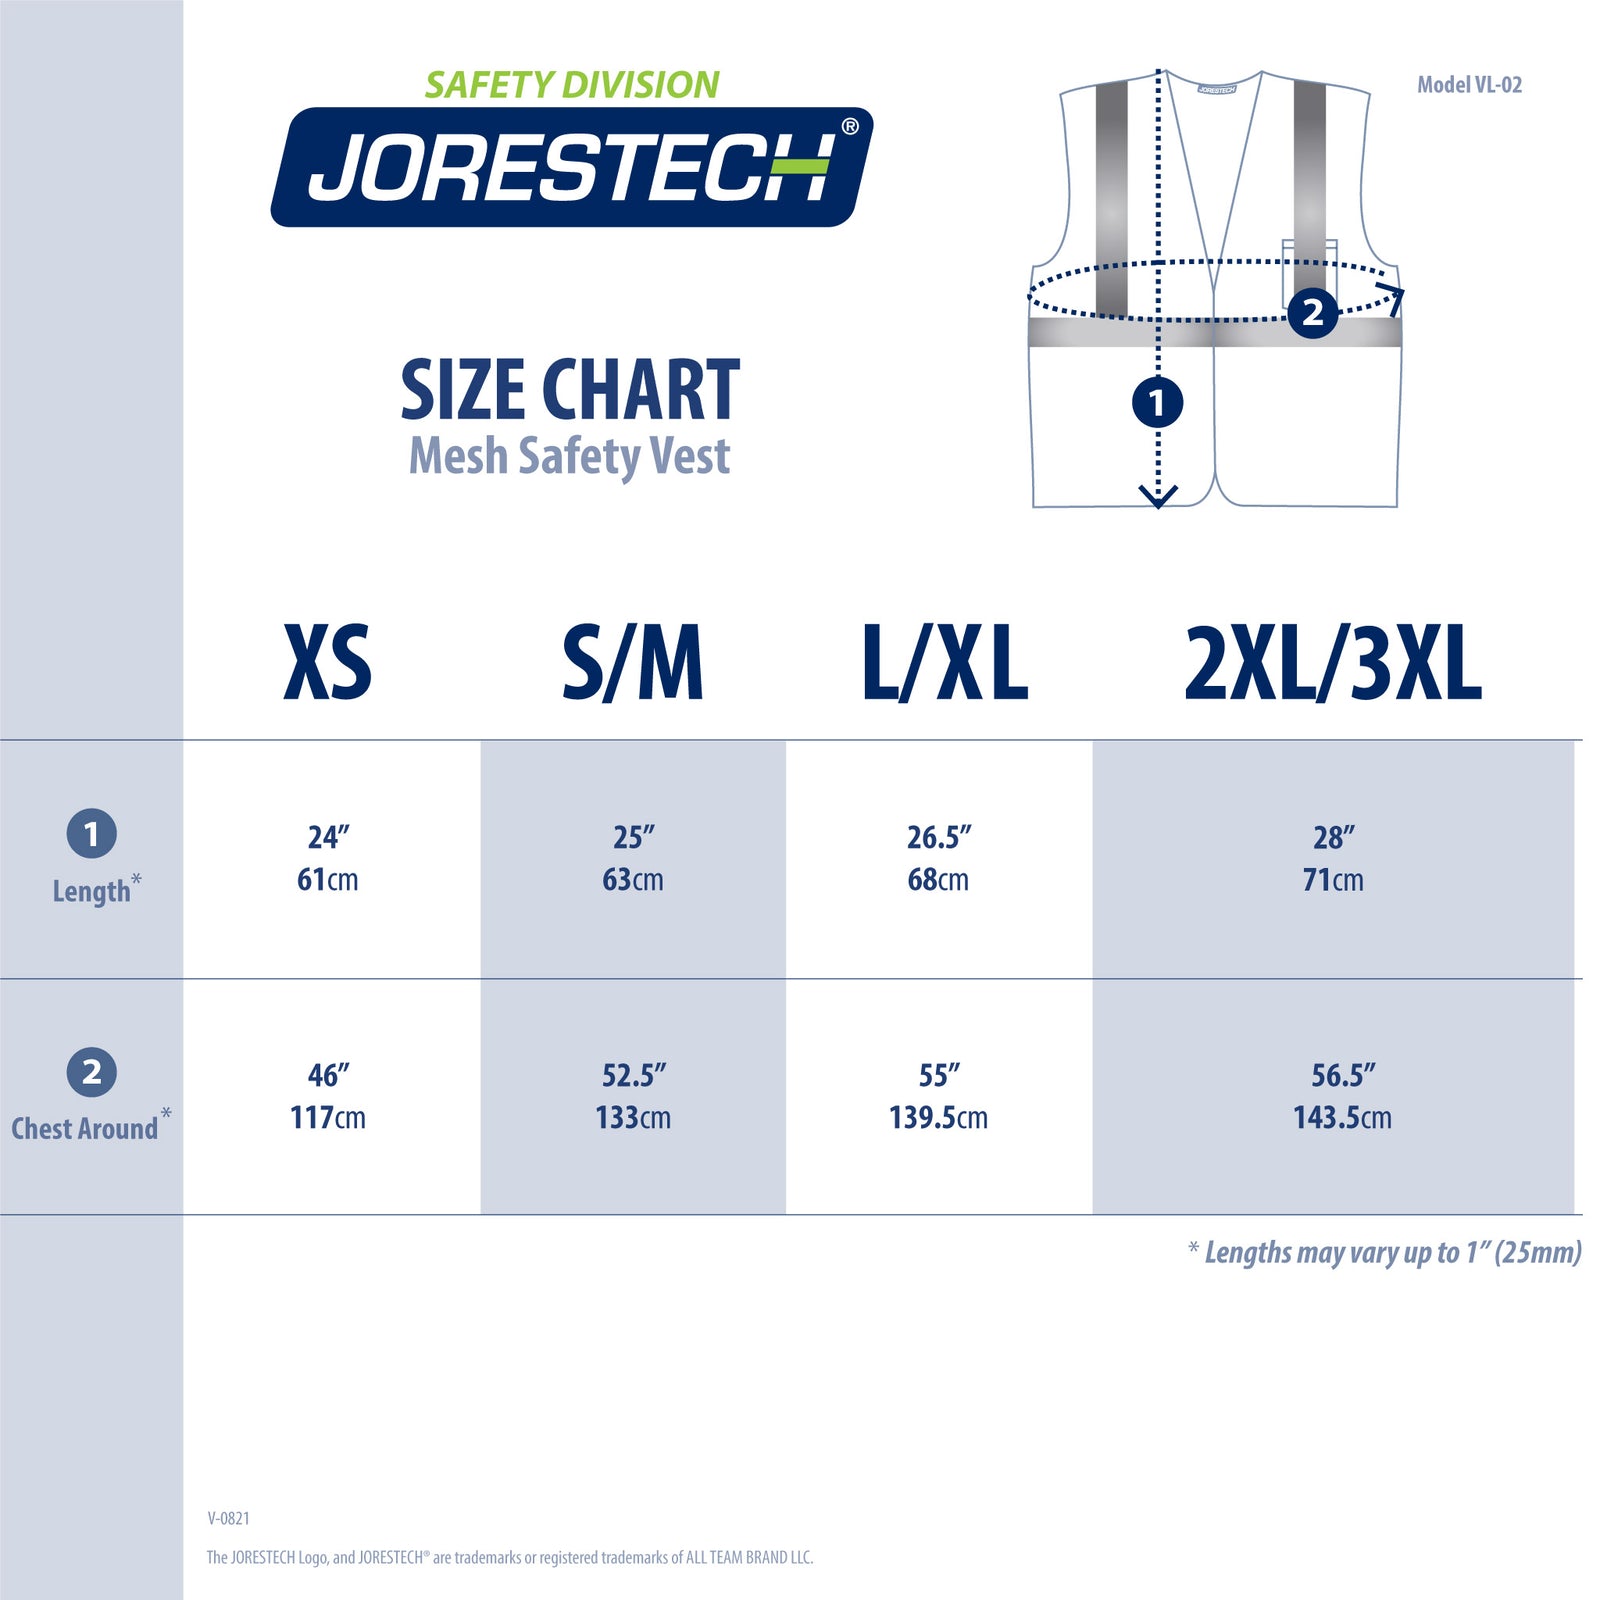 Size chart for the JORESTECH customizable safety vest